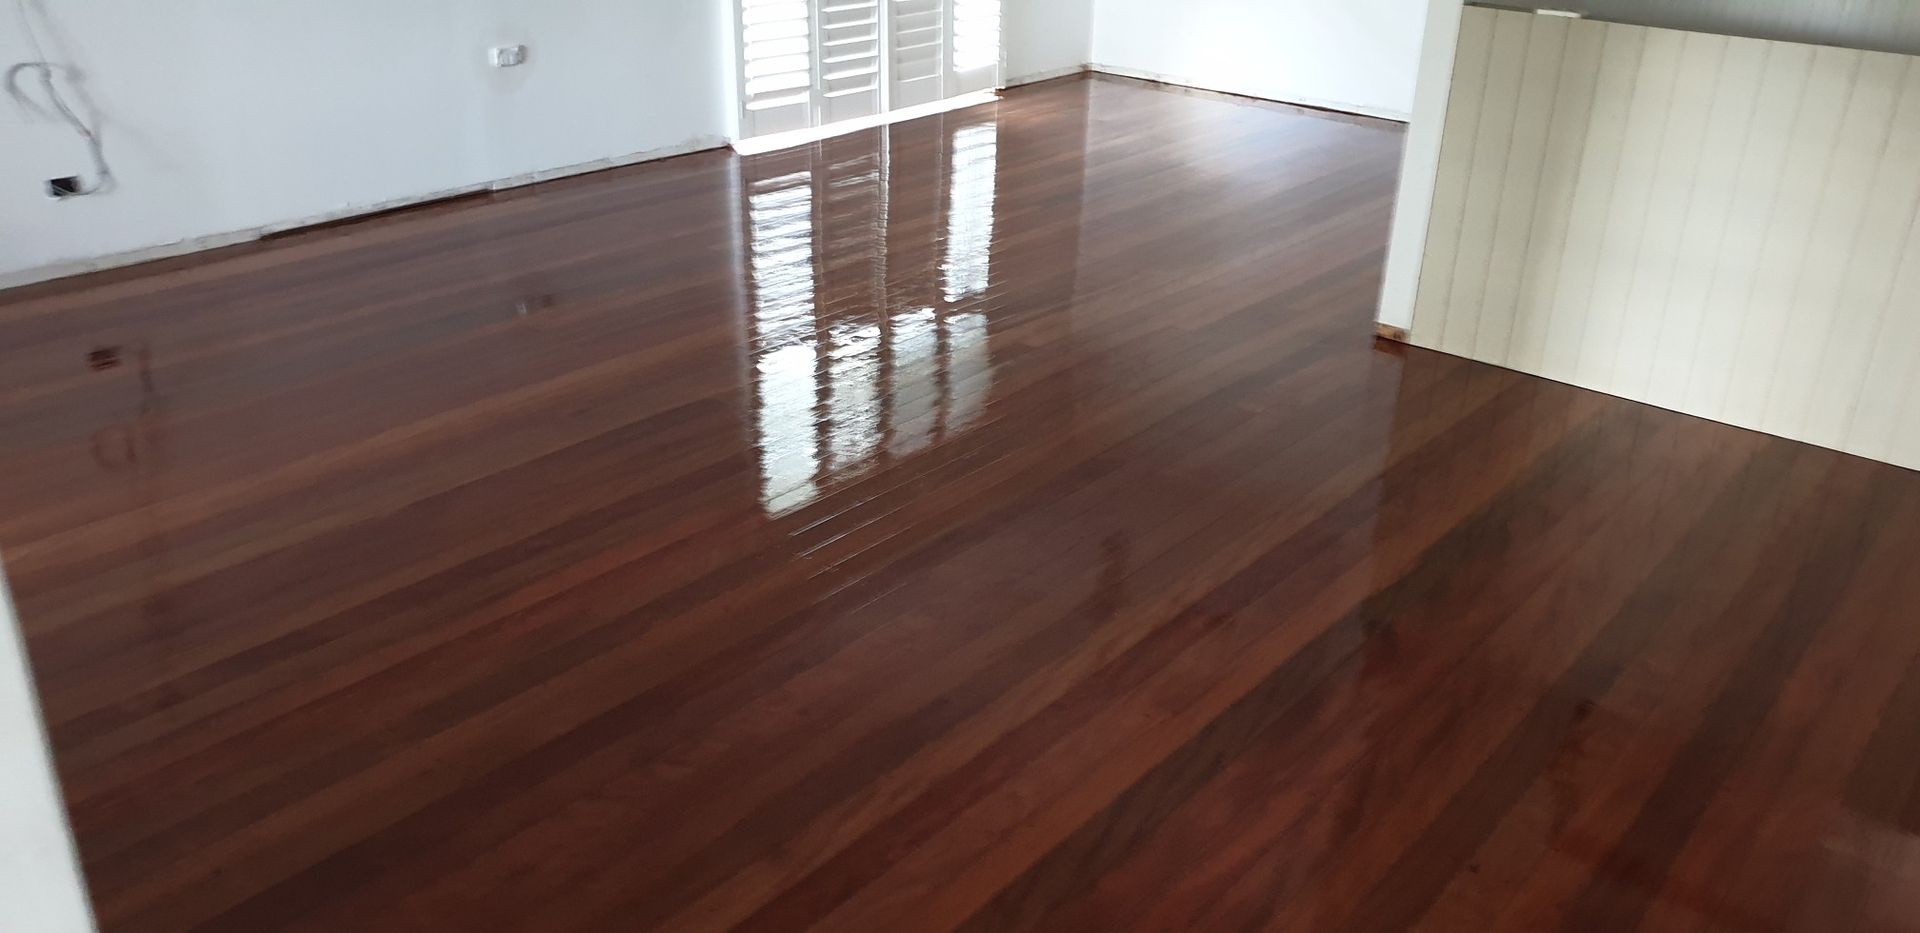 Ipswich Floor Sanding and Polishing - Brassall, QLD 4305 - 0407 014 883 | ShowMeLocal.com